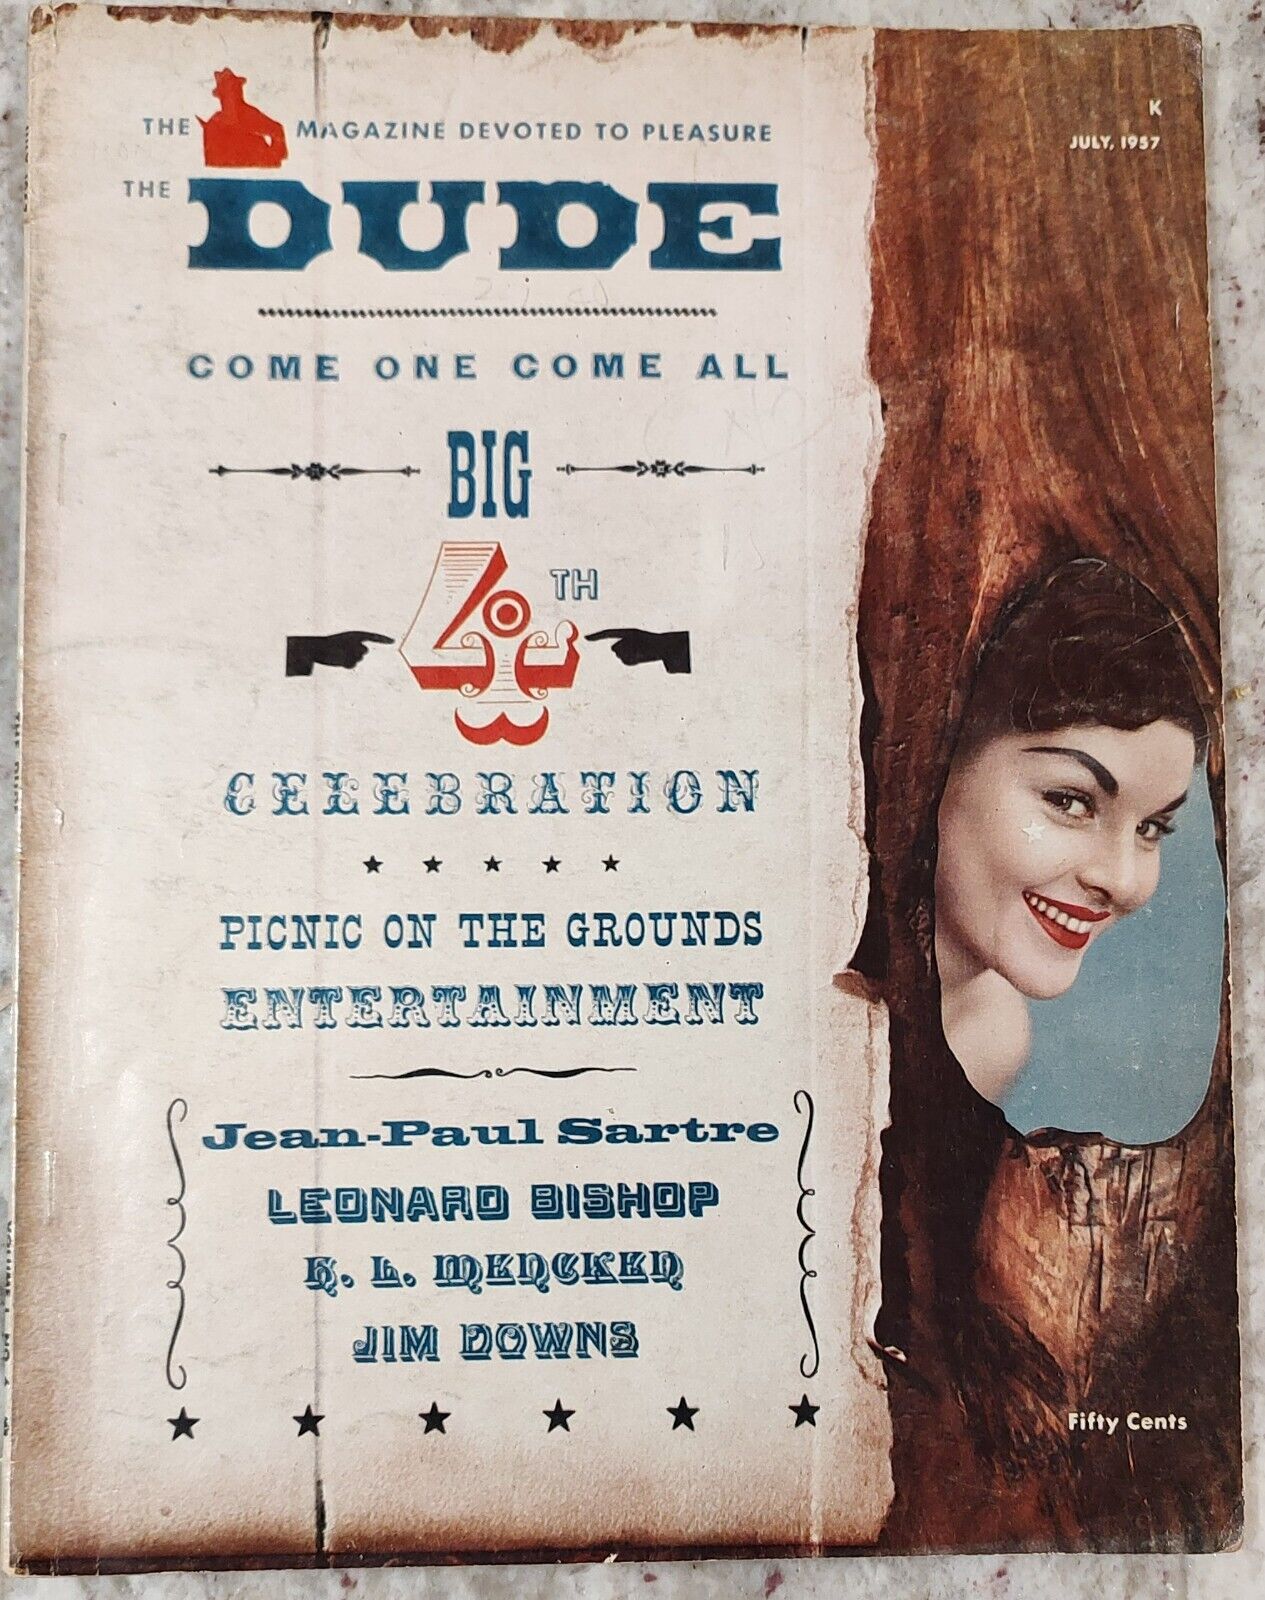 Vintage Magazine Dud e July 1957 Jean Paul Sartre Leonard Bishop Pulp